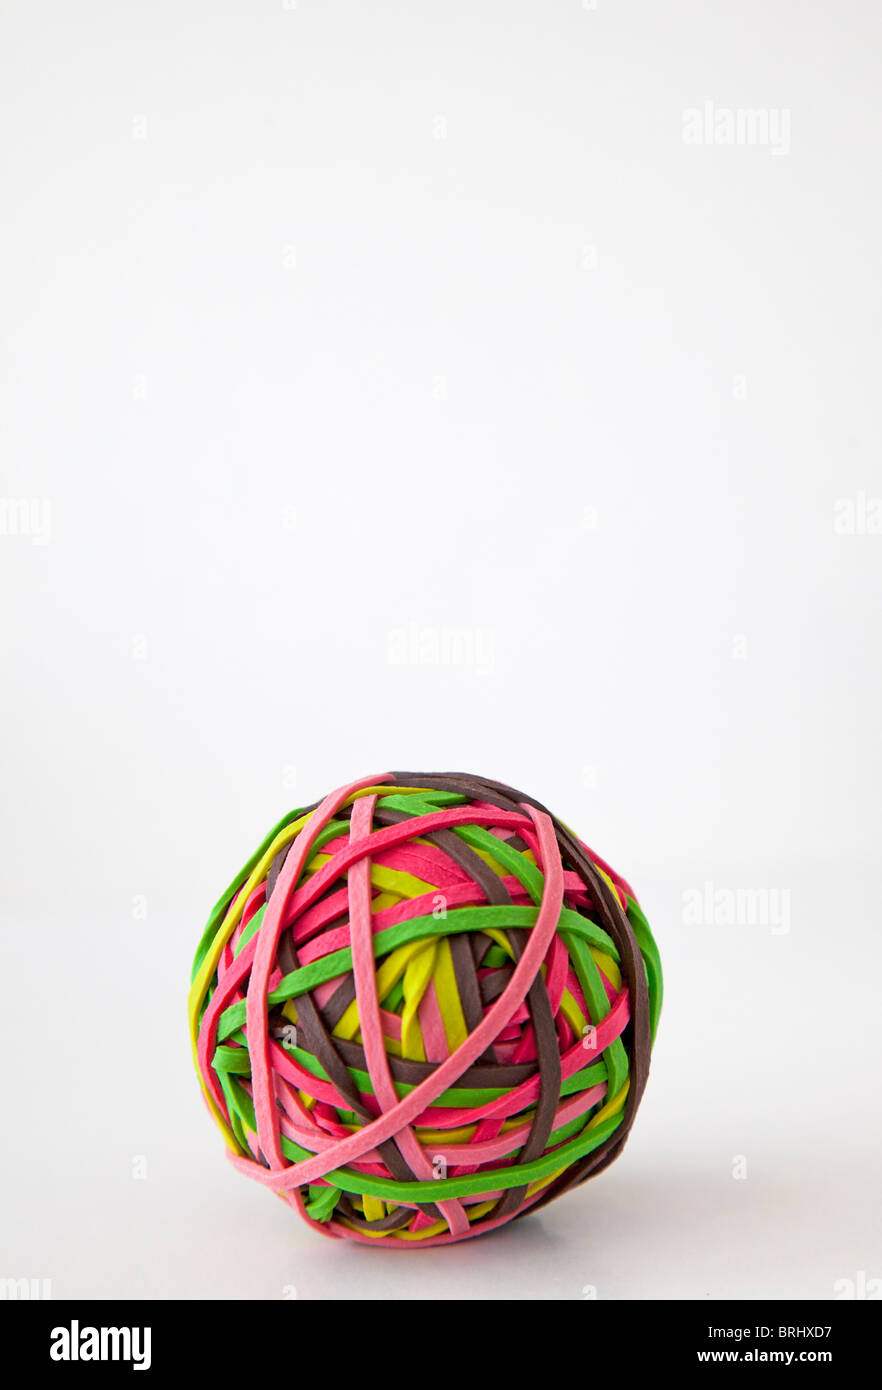 rubber band ball Stock Photo